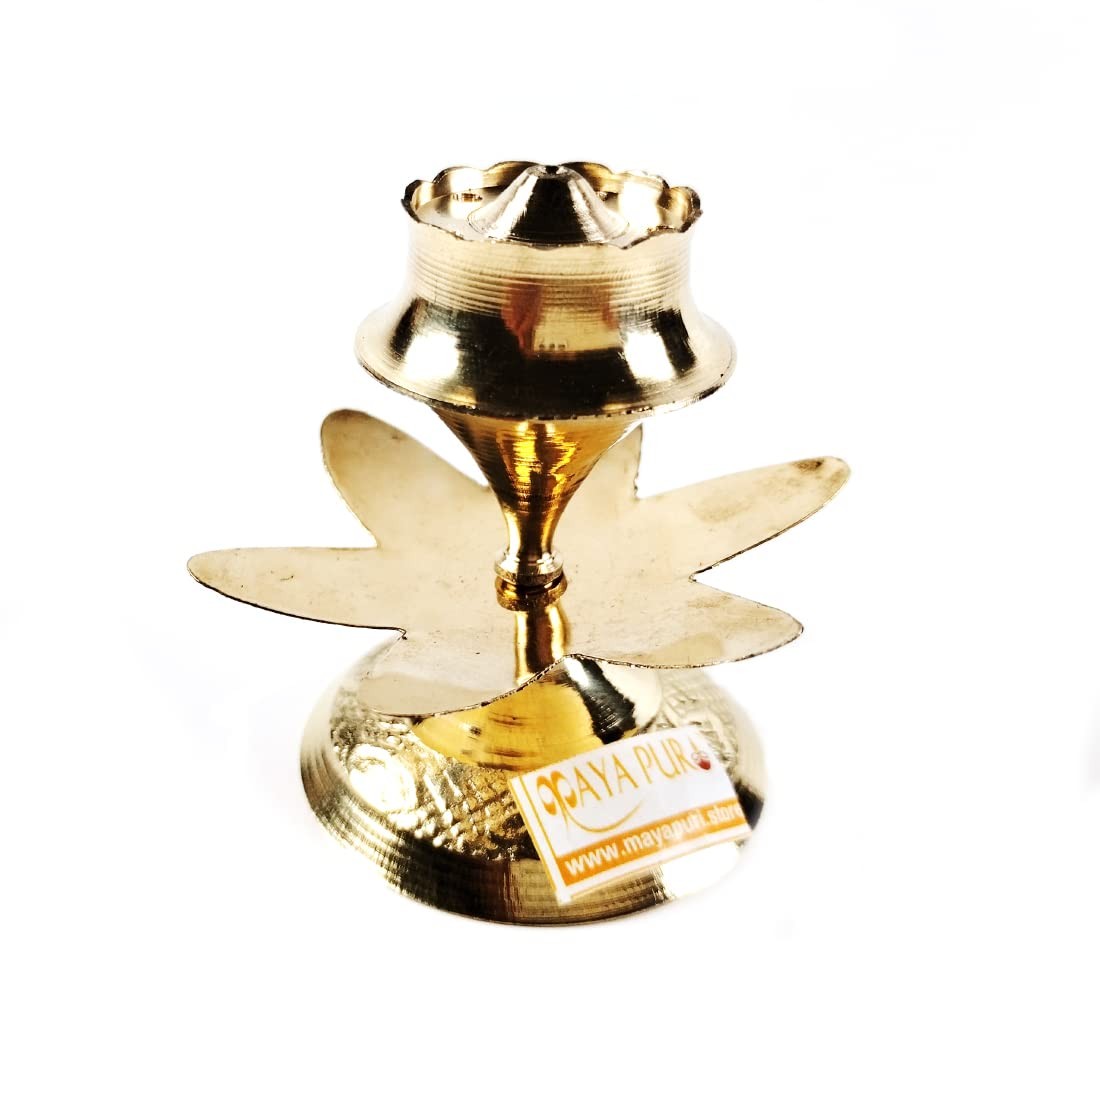 MAYAPURI Brass Incense Agarbatti Stand Holder, Puja Accessory, Spiritual & Religious